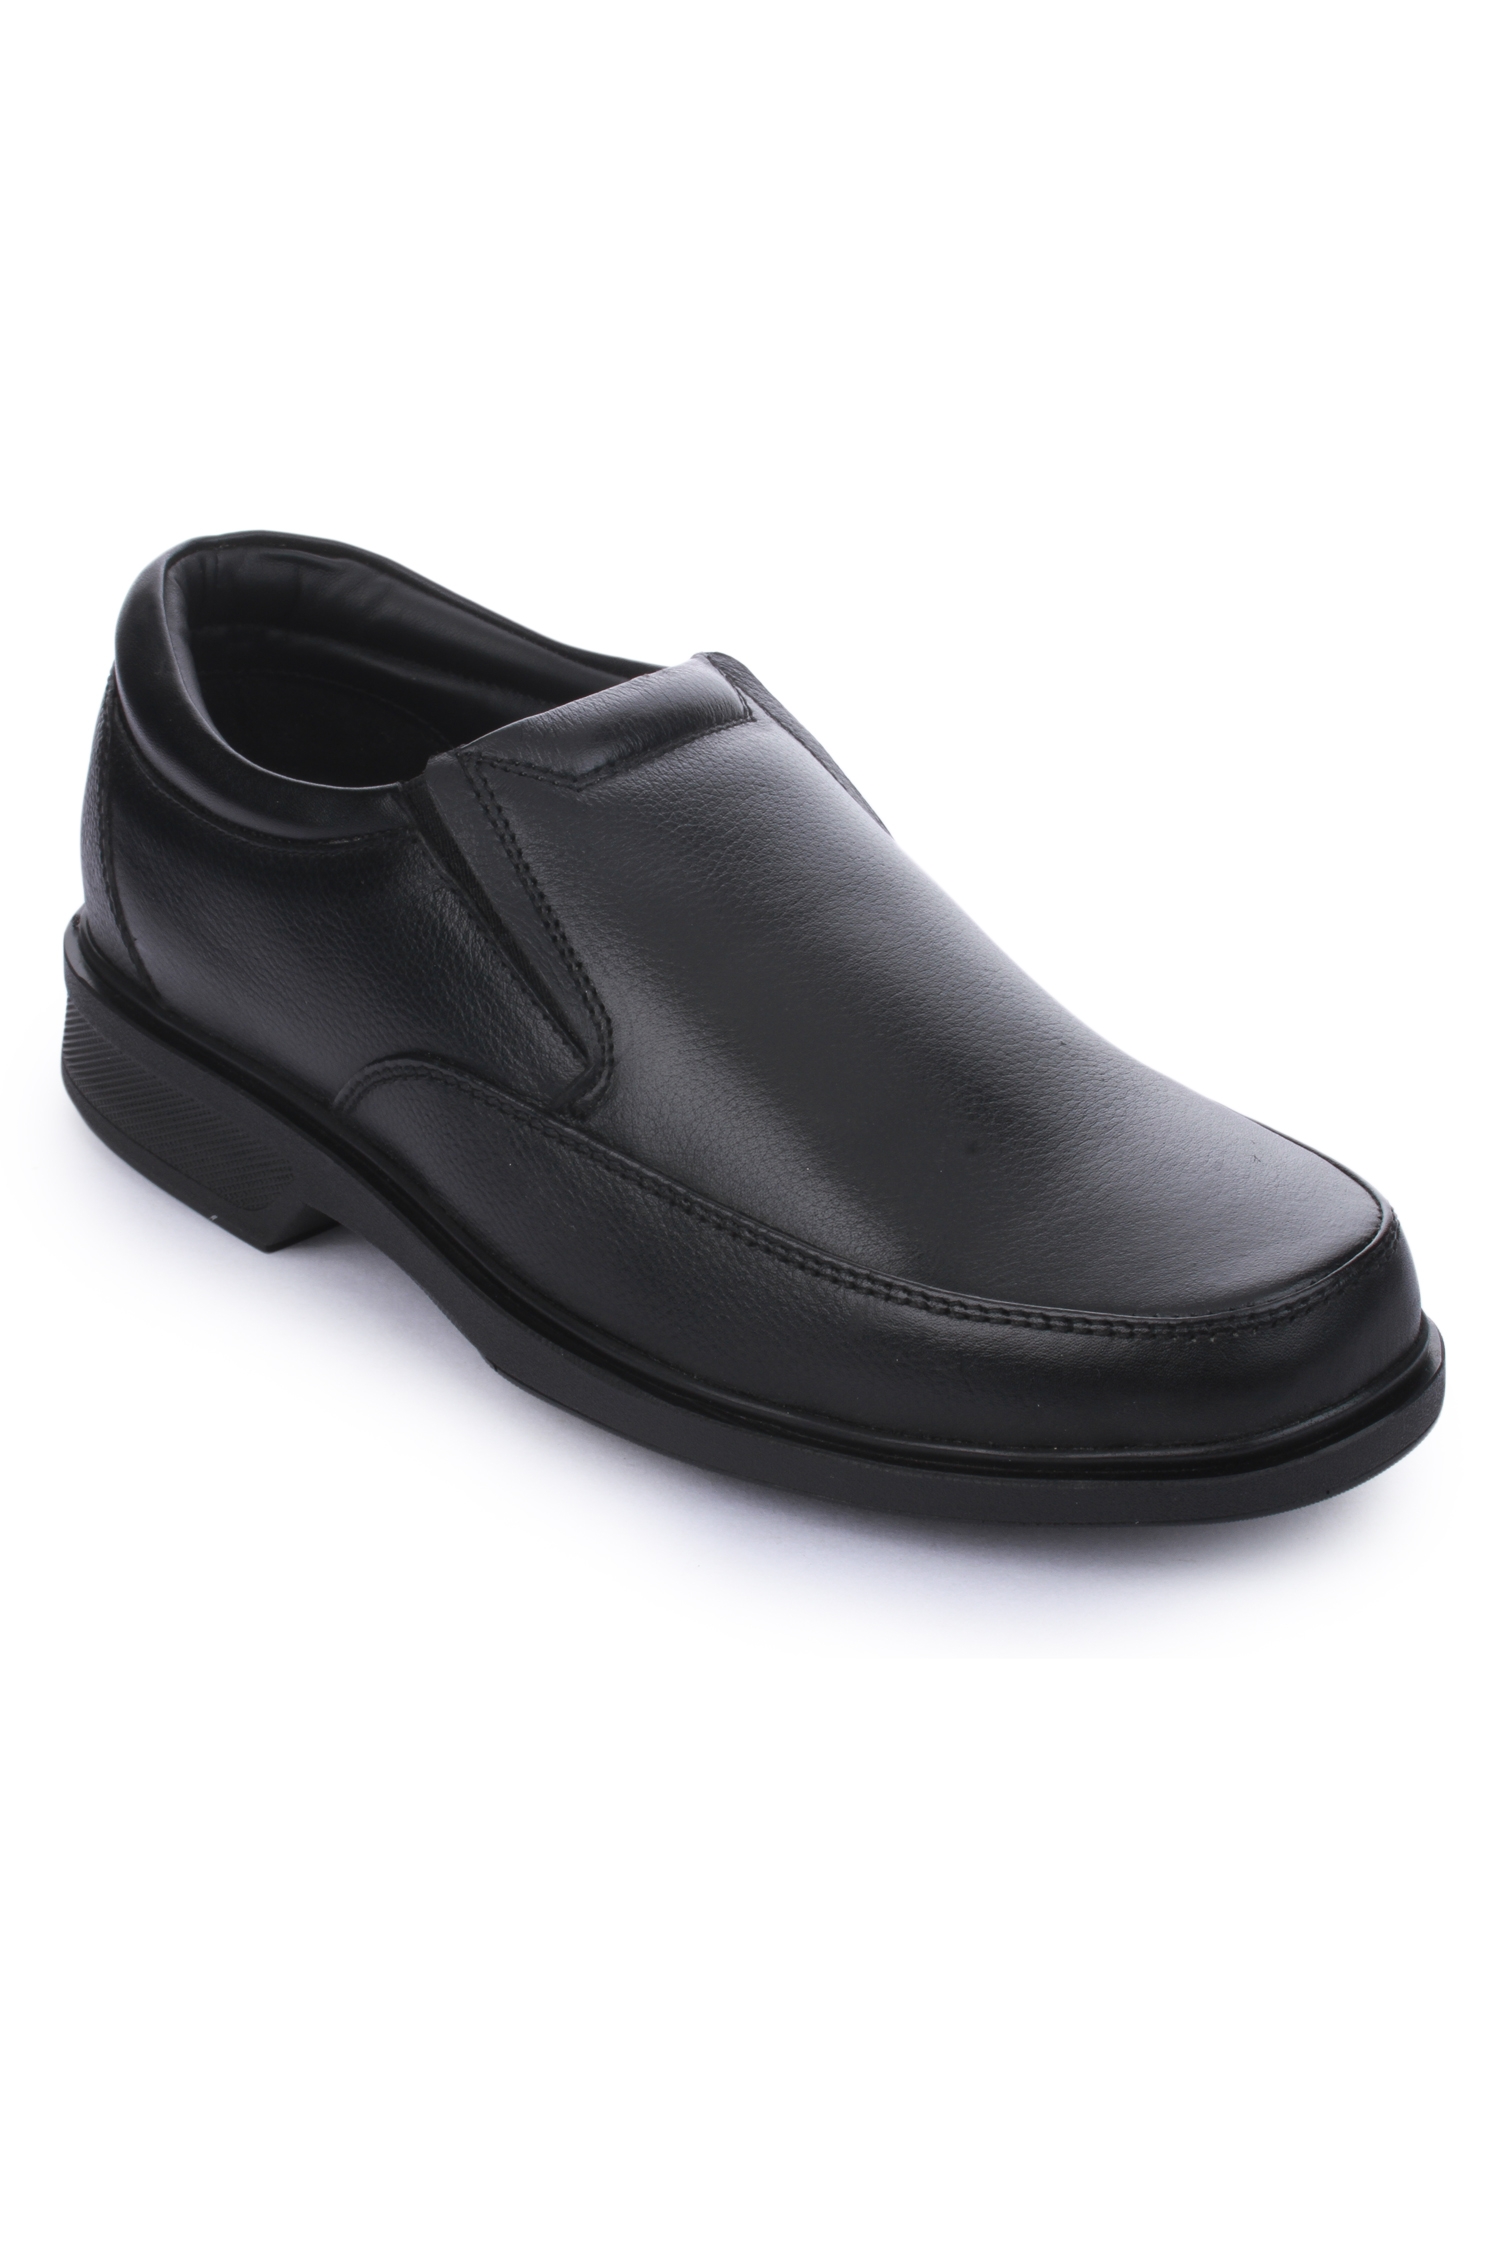 Liberty | Liberty Healers Fl-1413 Mens Black Formal Shoes